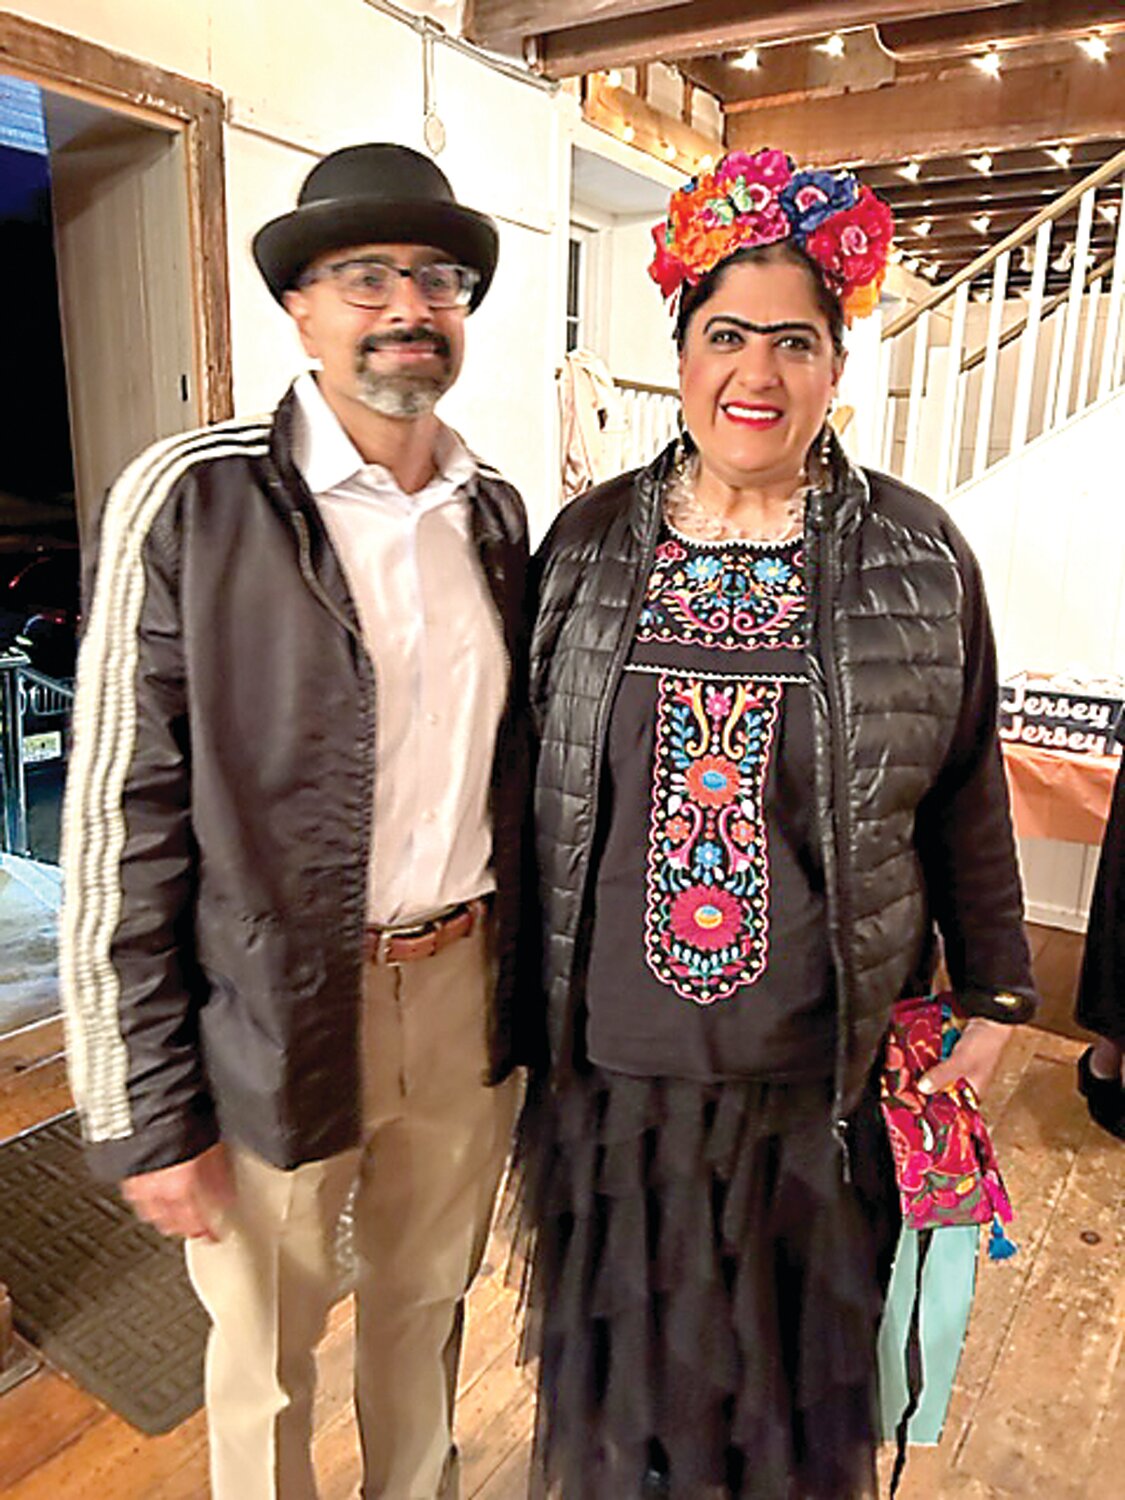 Raj Bhai and Shimul Shah, who came dressed as Frida Kahlo.